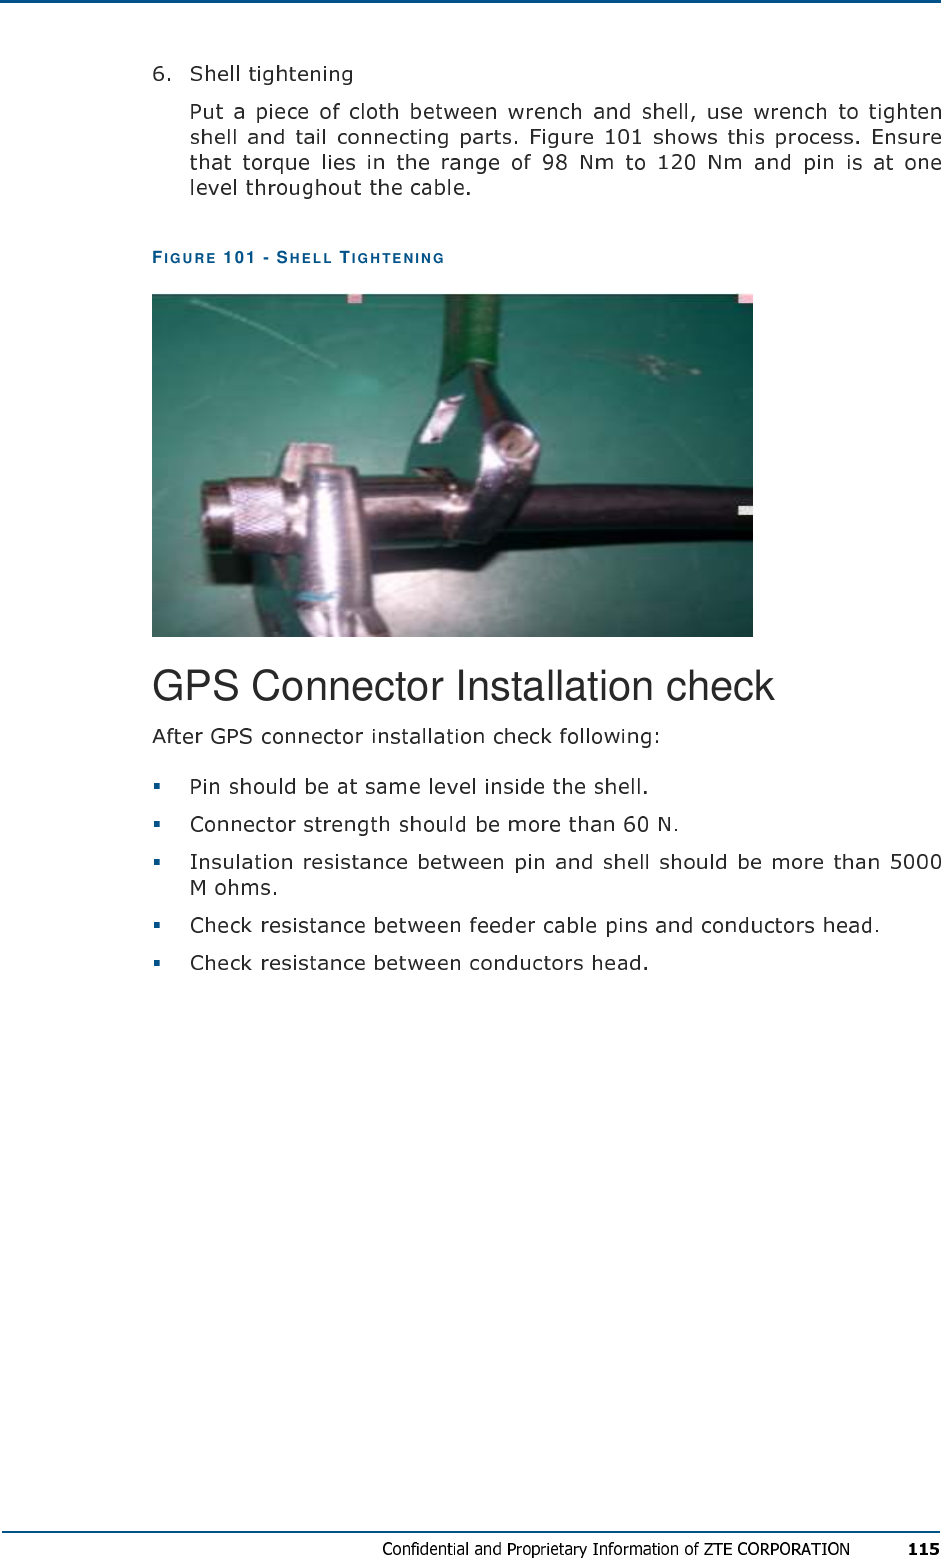  FIG U R E   101 - SHE LL  TI G H TE N IN G    GPS Connector Installation check      